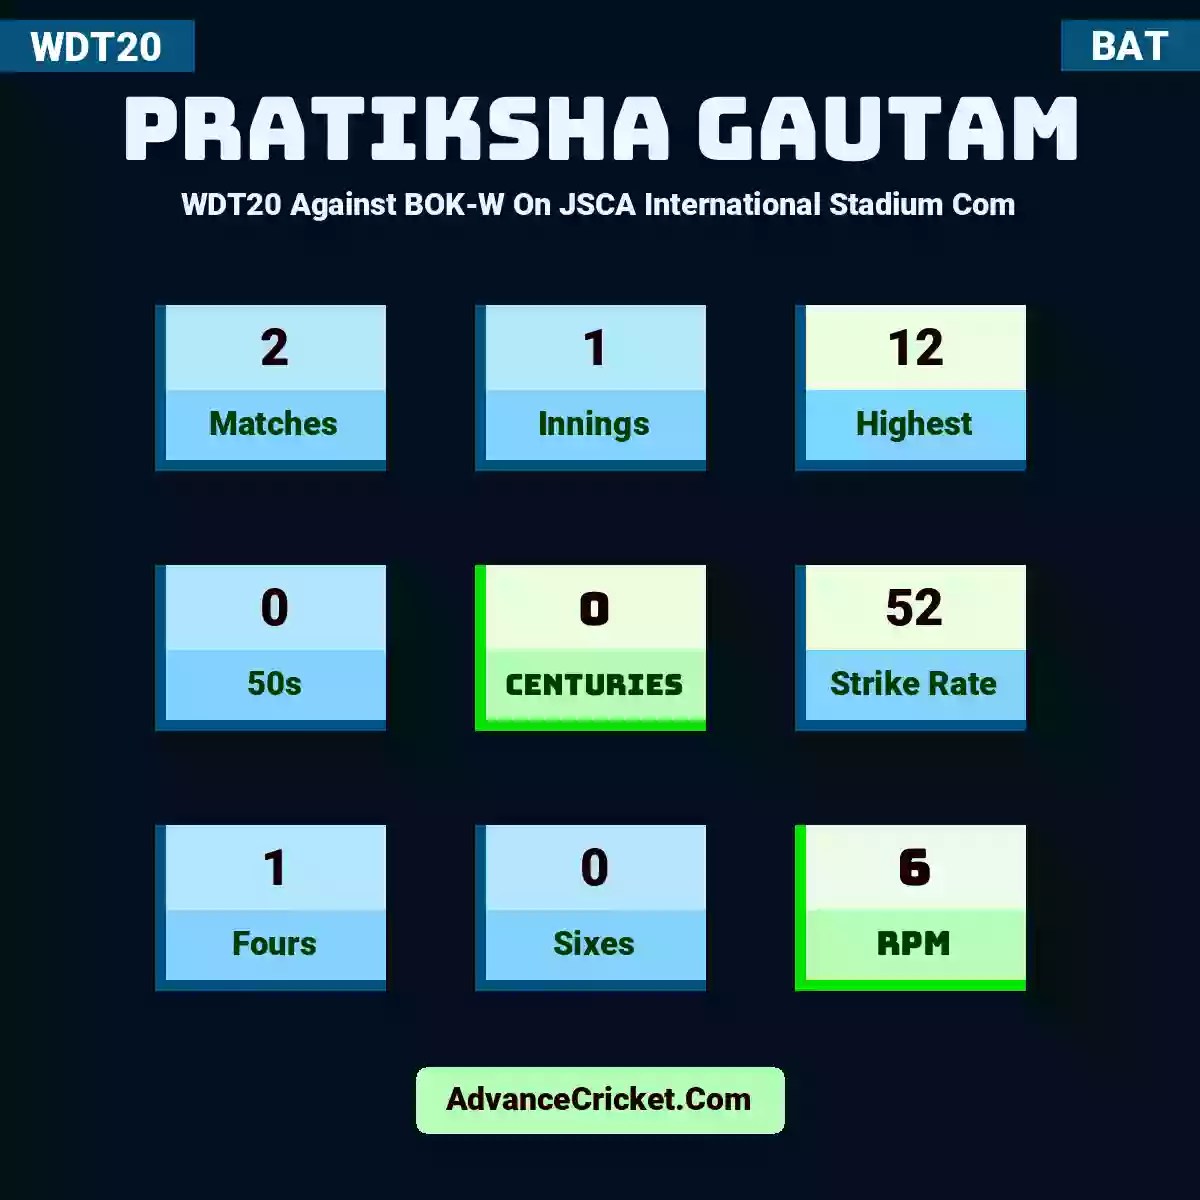 Pratiksha Gautam WDT20  Against BOK-W On JSCA International Stadium Com, Pratiksha Gautam played 2 matches, scored 12 runs as highest, 0 half-centuries, and 0 centuries, with a strike rate of 52. P.Gautam hit 1 fours and 0 sixes, with an RPM of 6.